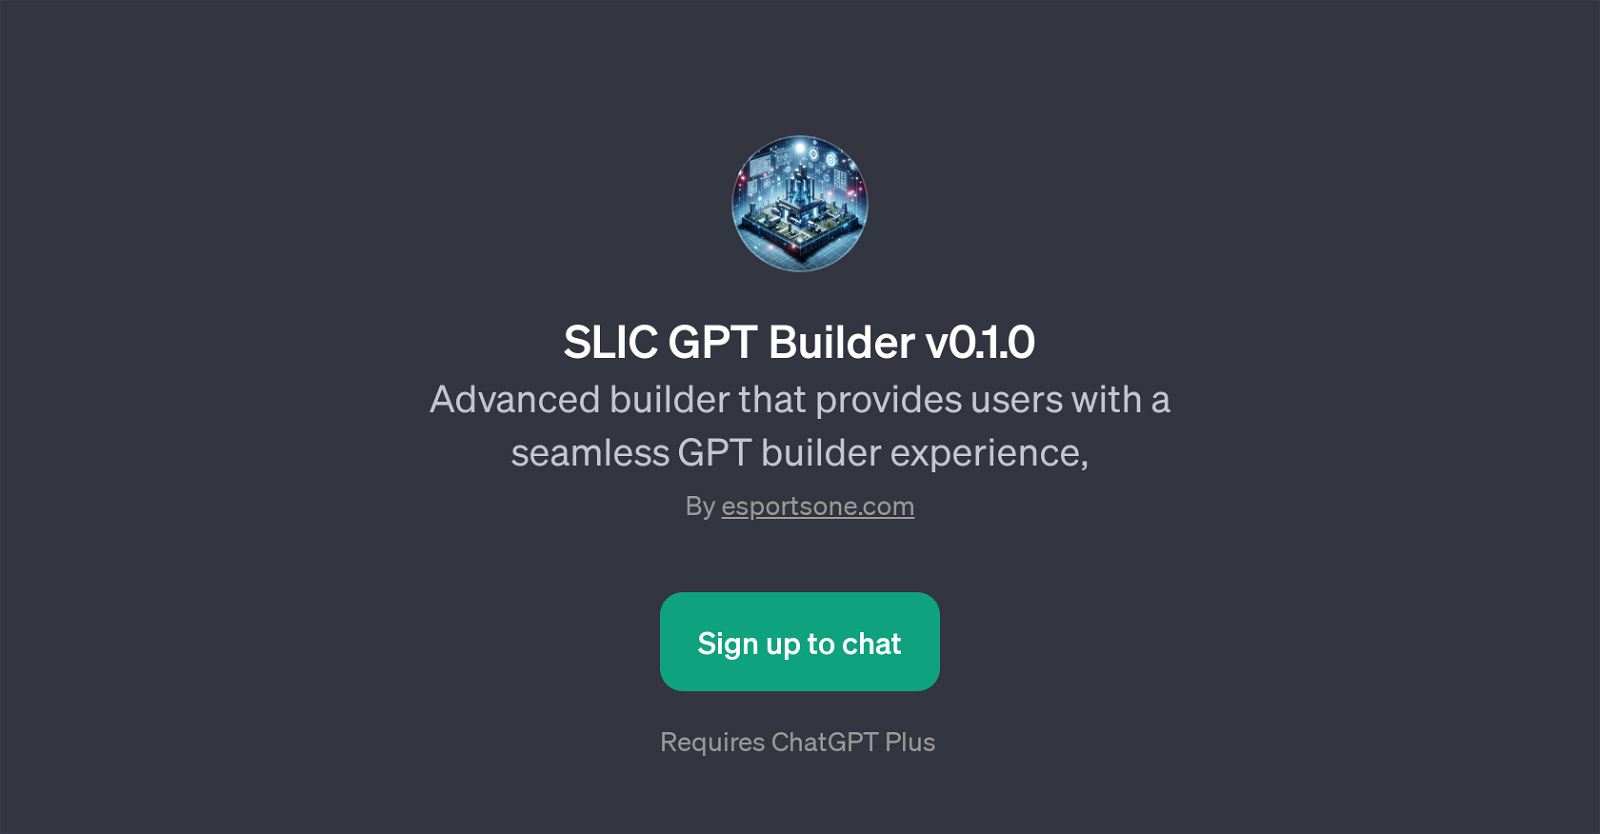 SLIC GPT Builder v0.1.0 website